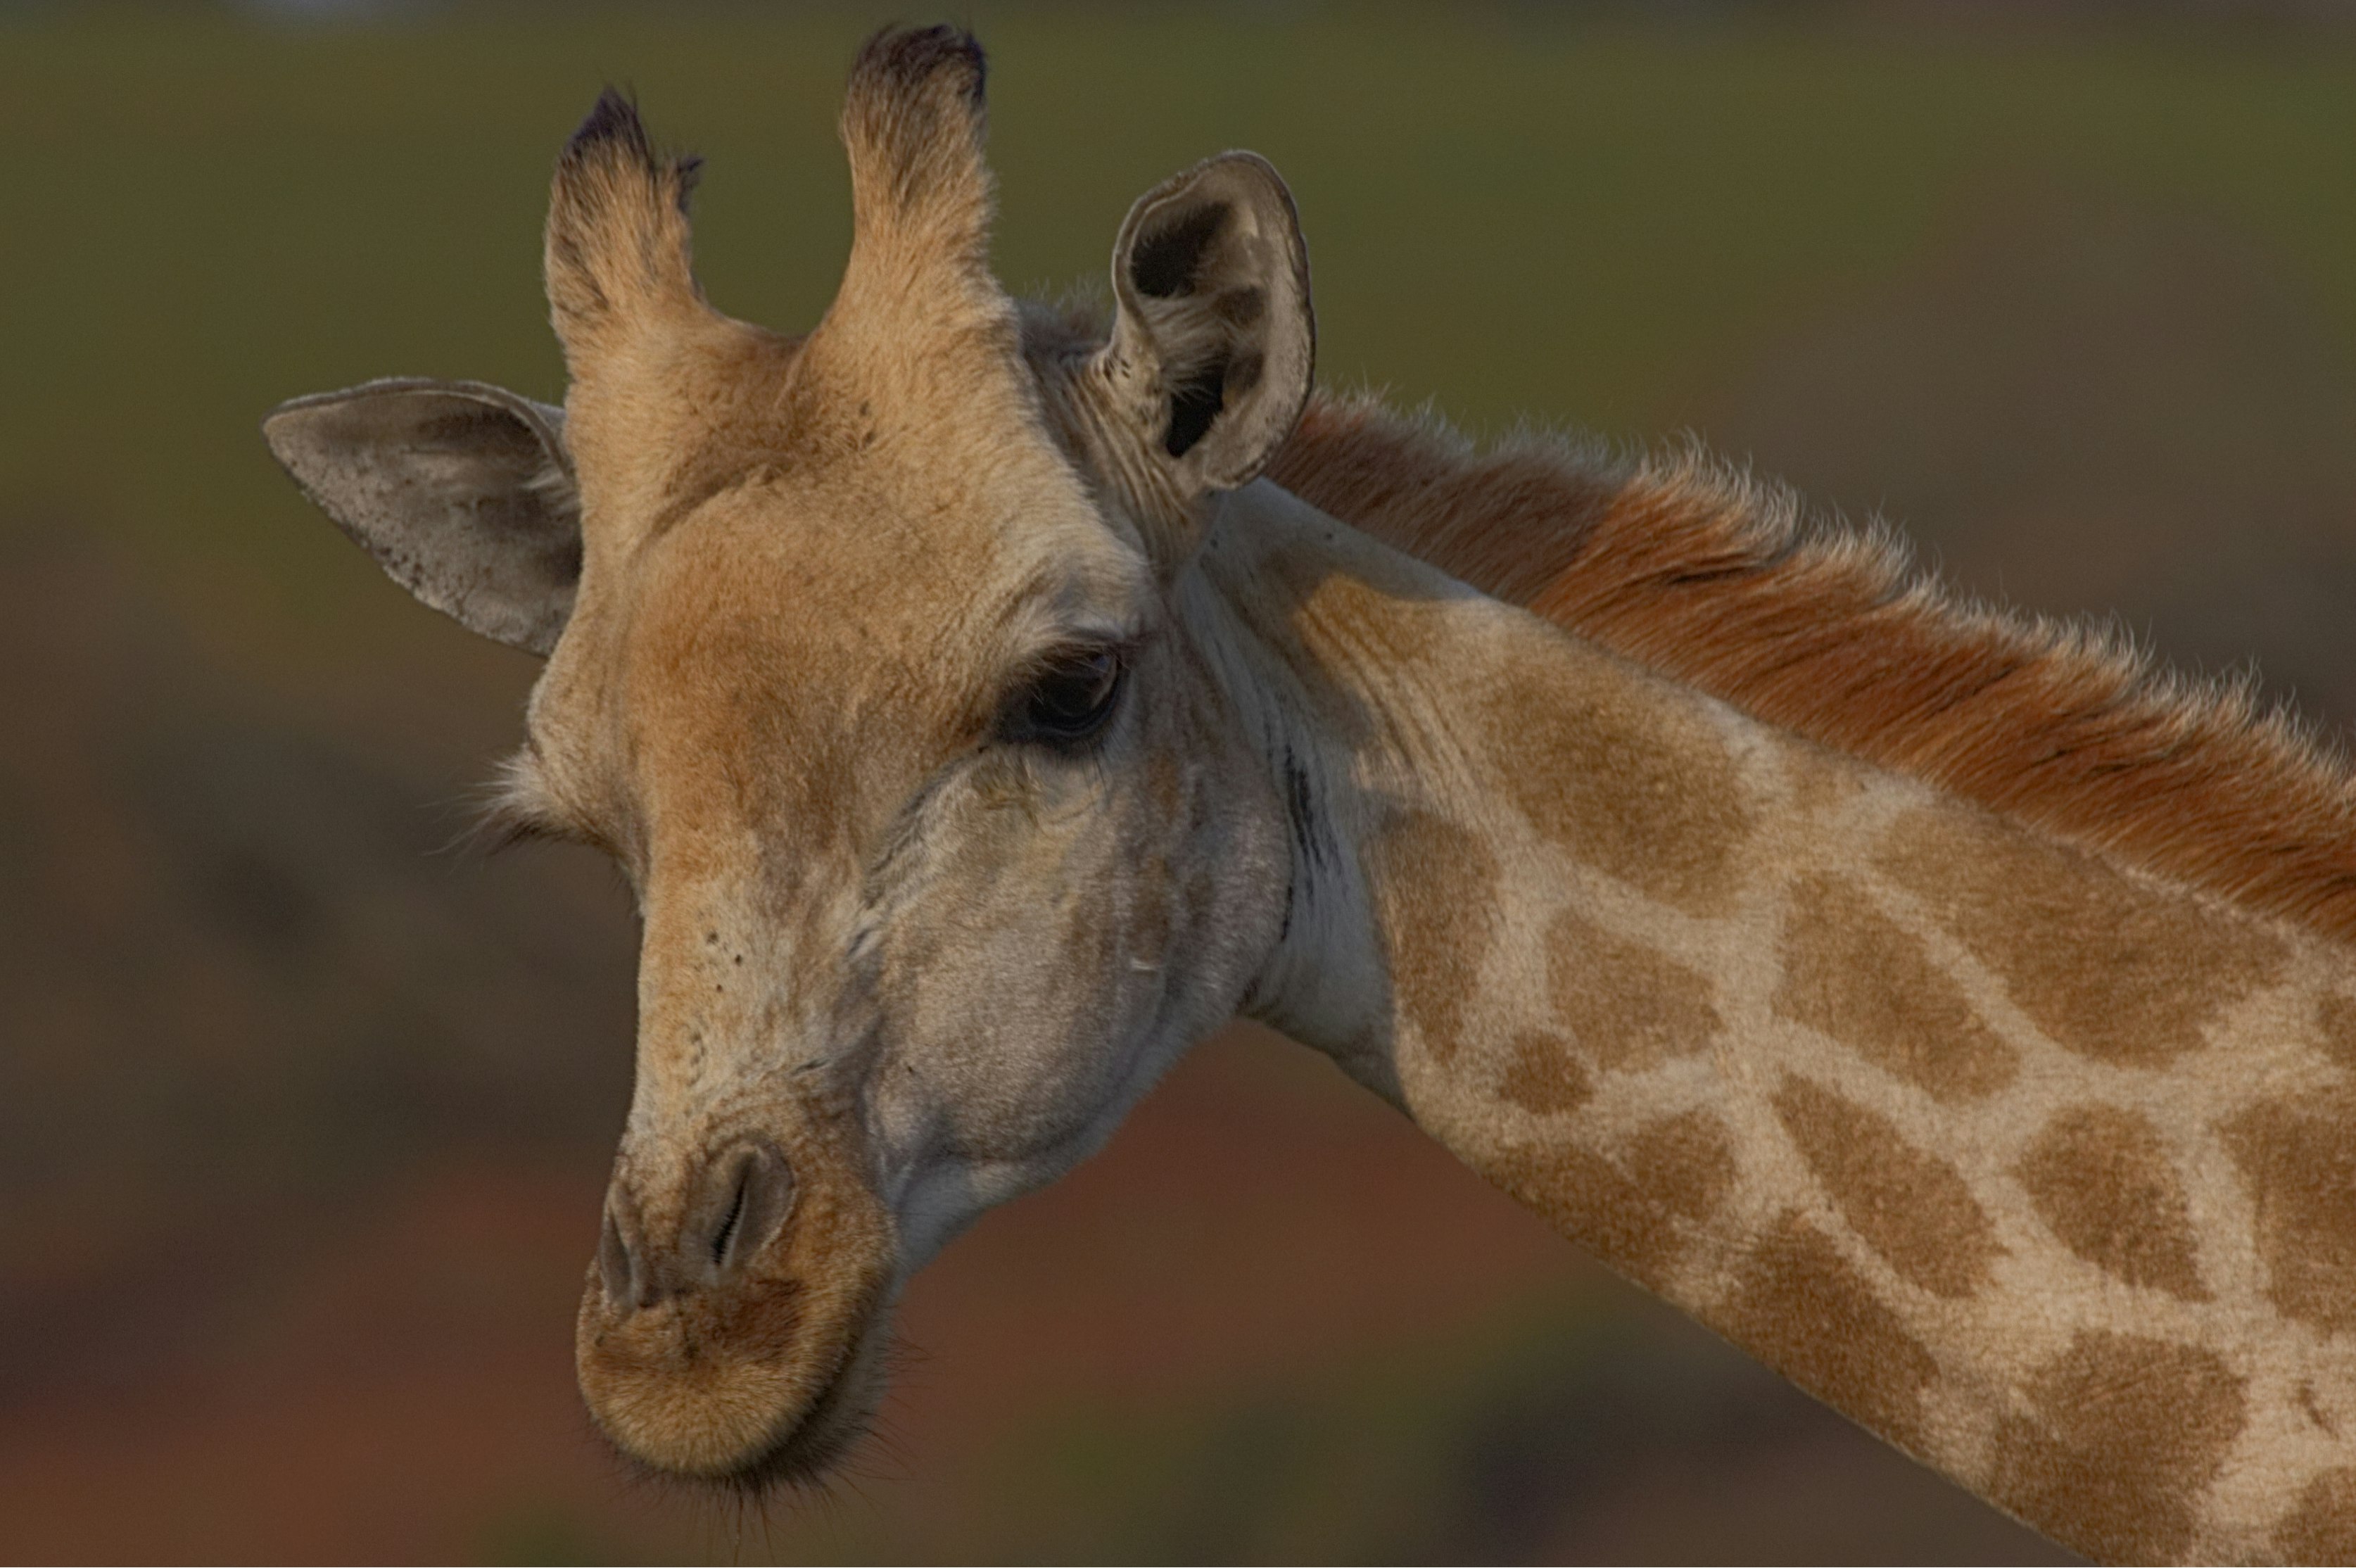 Photo de peigner la girafe par Etienne Steenkamp